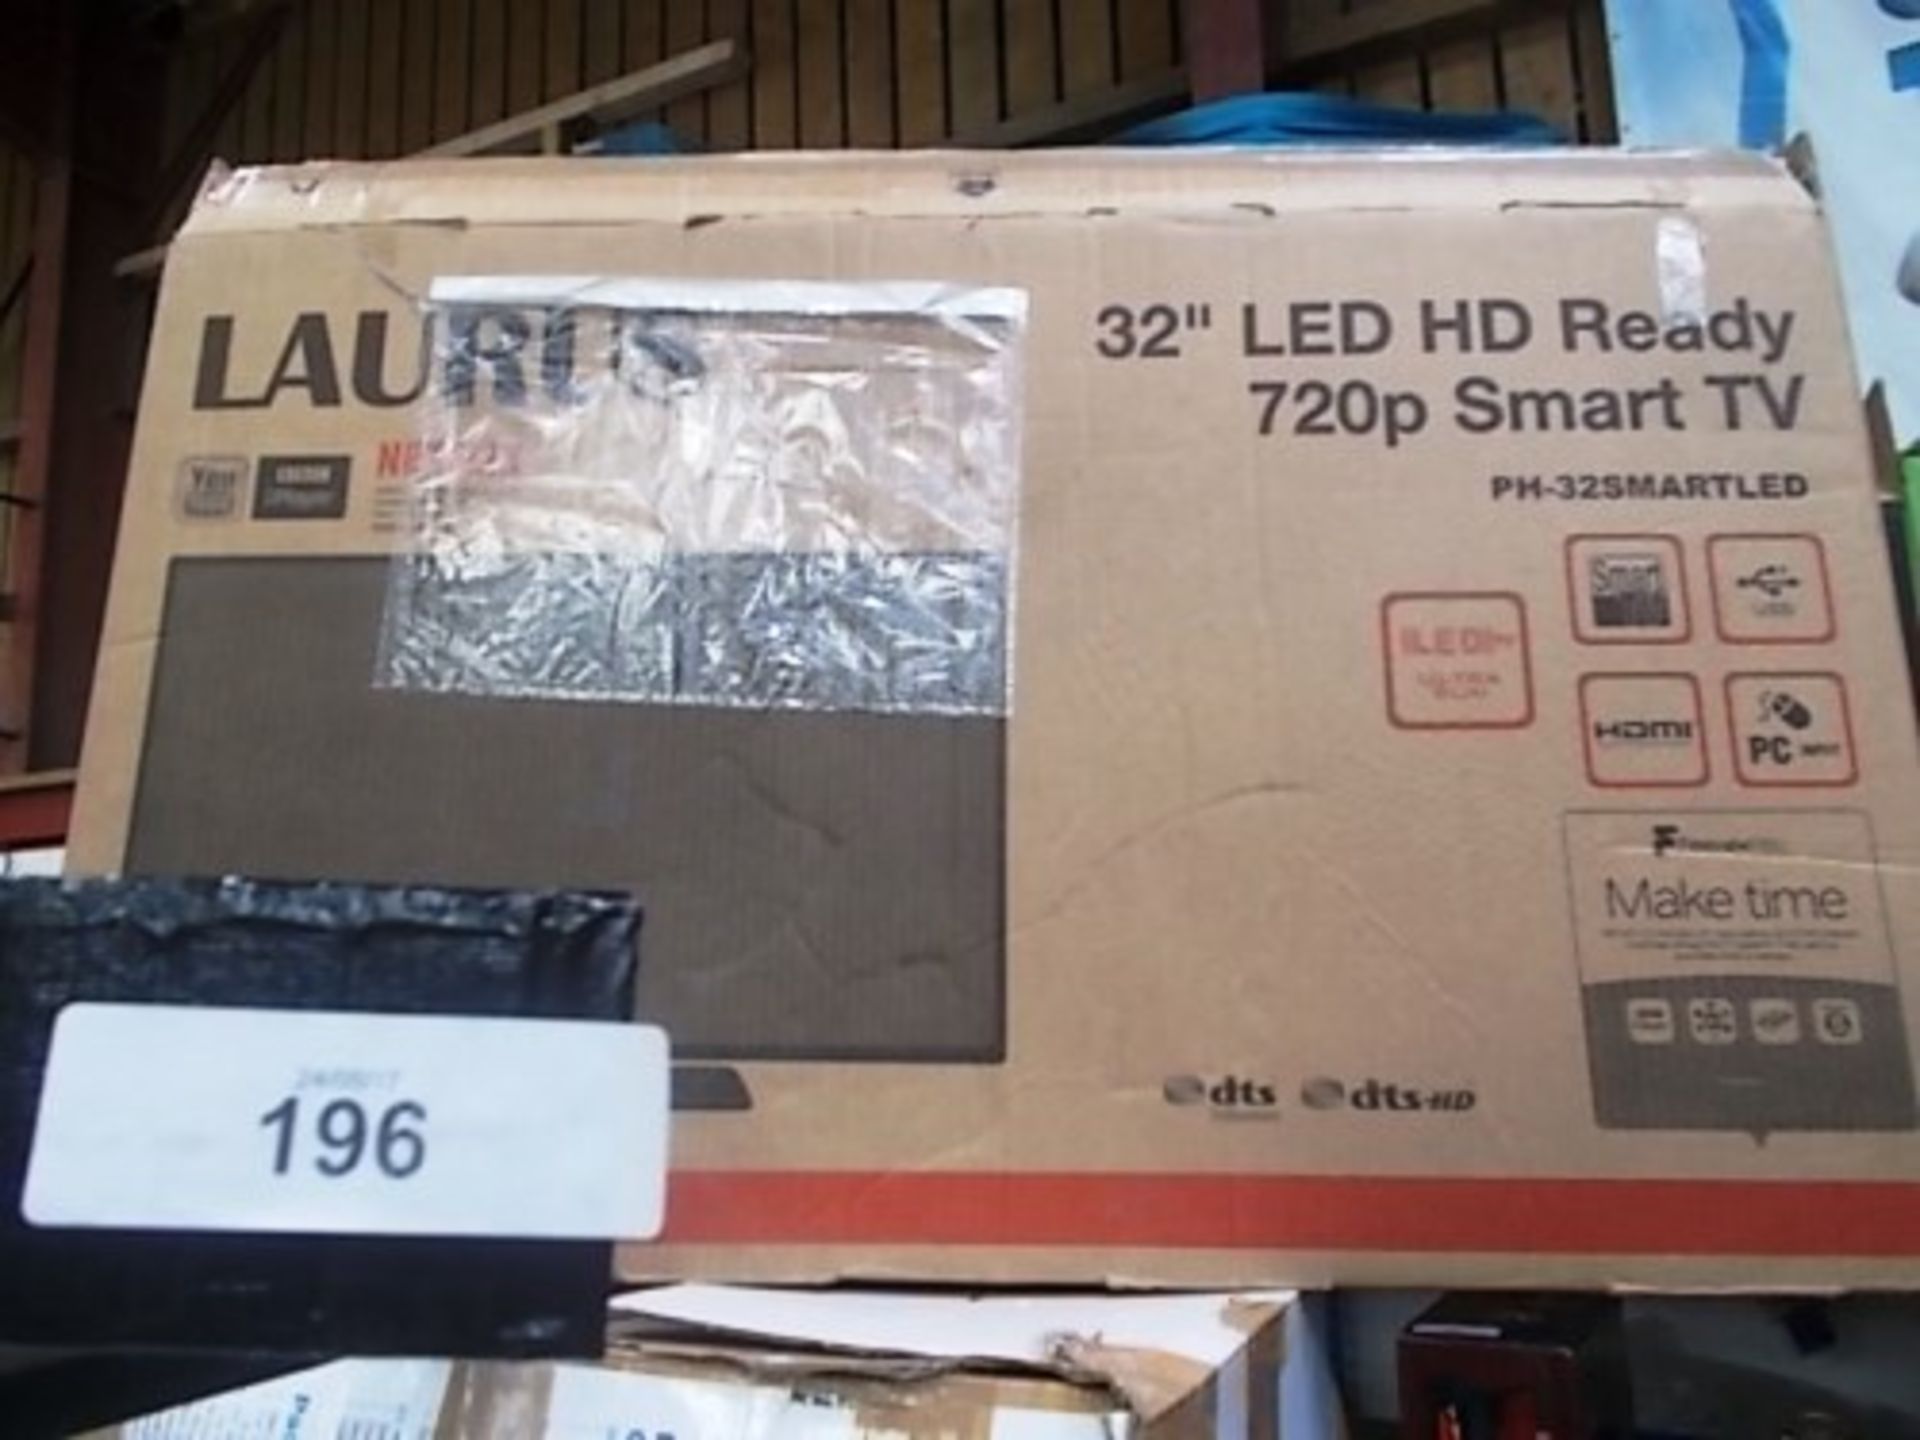 1 x Laurus 32" LED HD ready smart TV, model PH32SMARTLED - Broken screen (Bay 8)